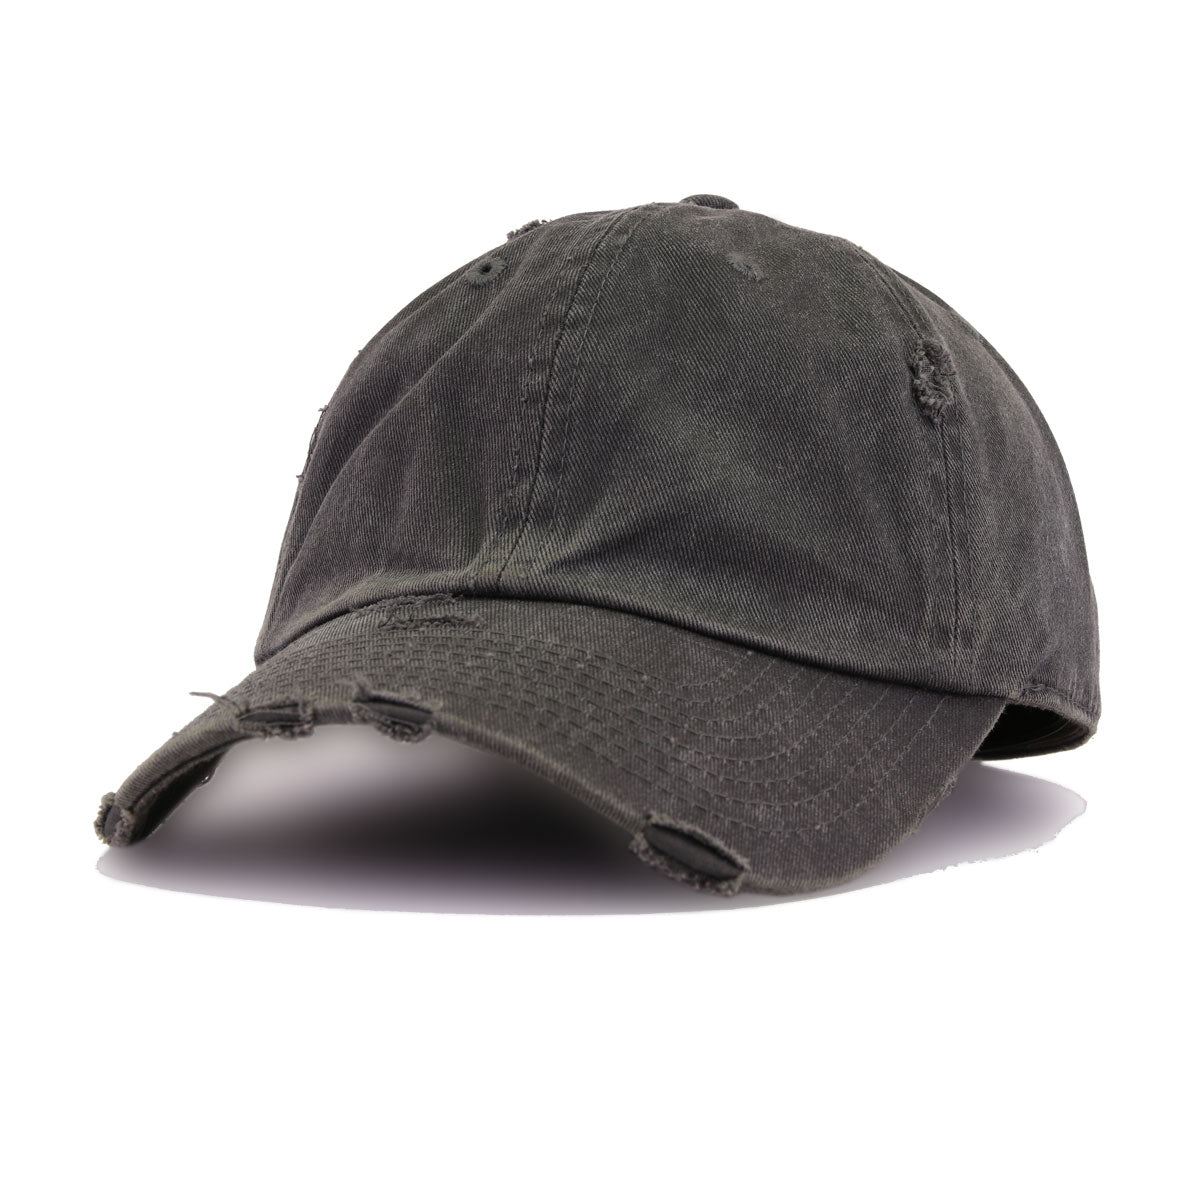 Distressed Pigmented Black KBEthos Vintage Dad Hat